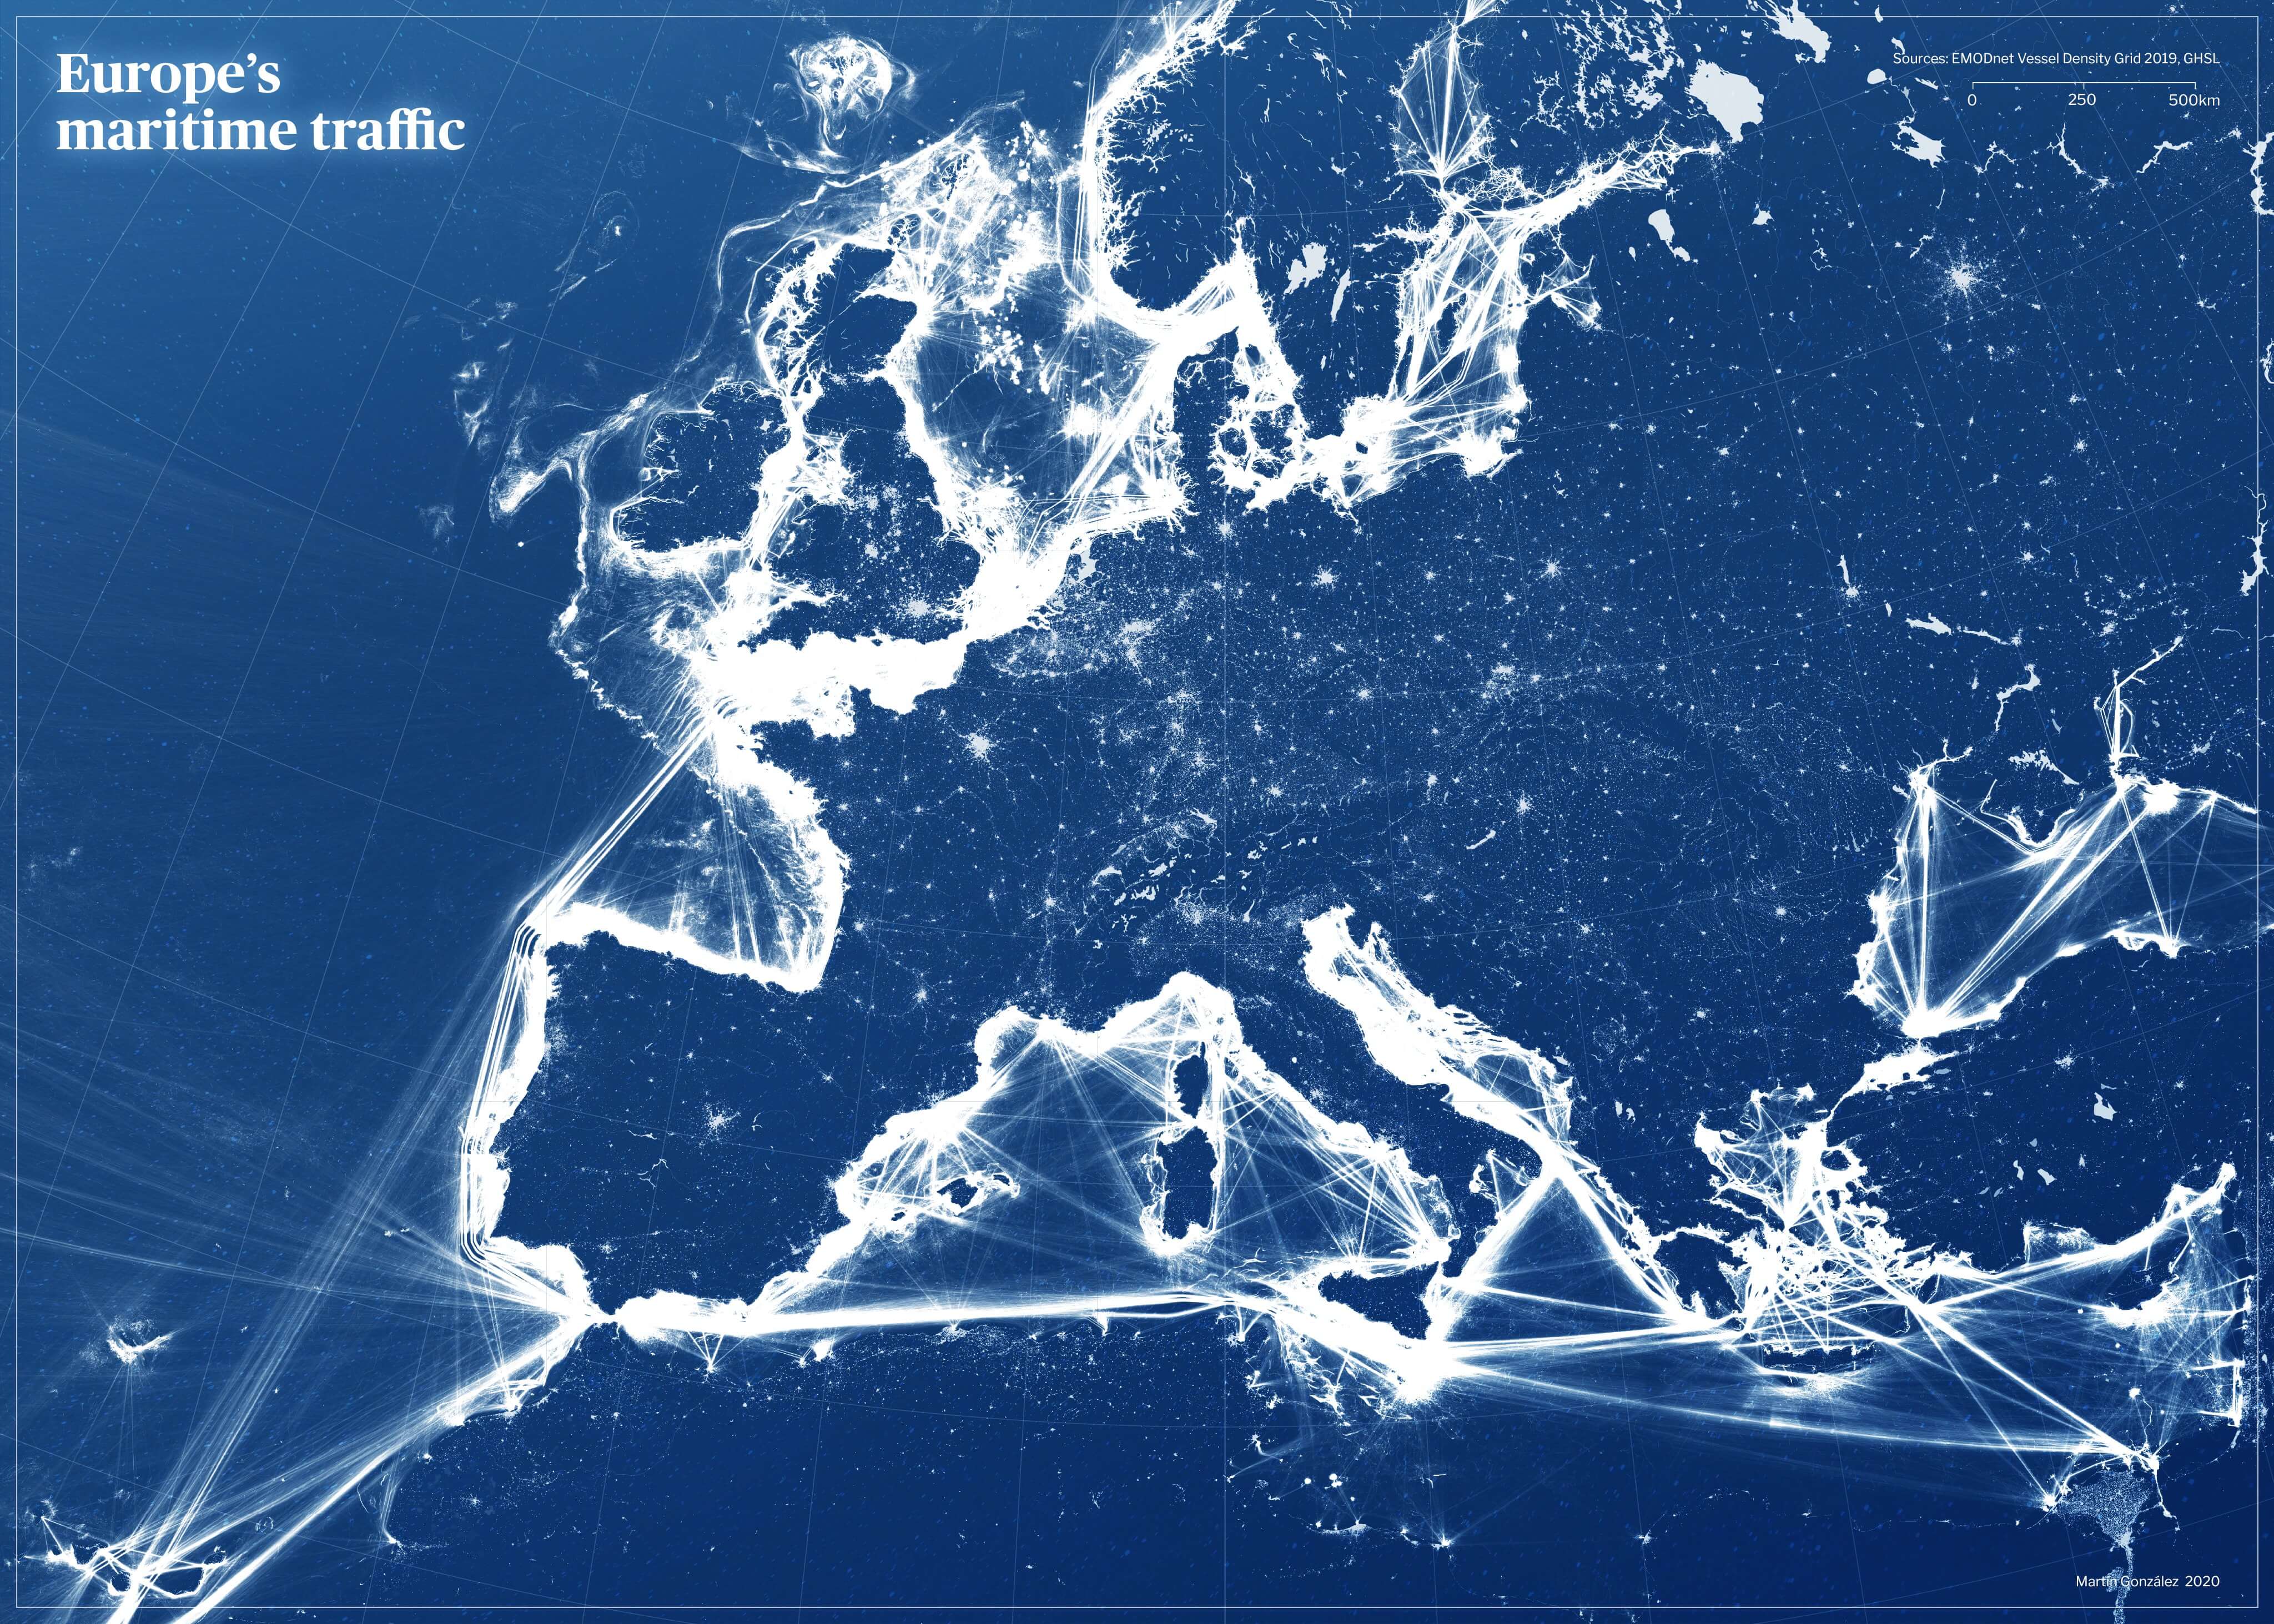  Europe’s maritime traffic